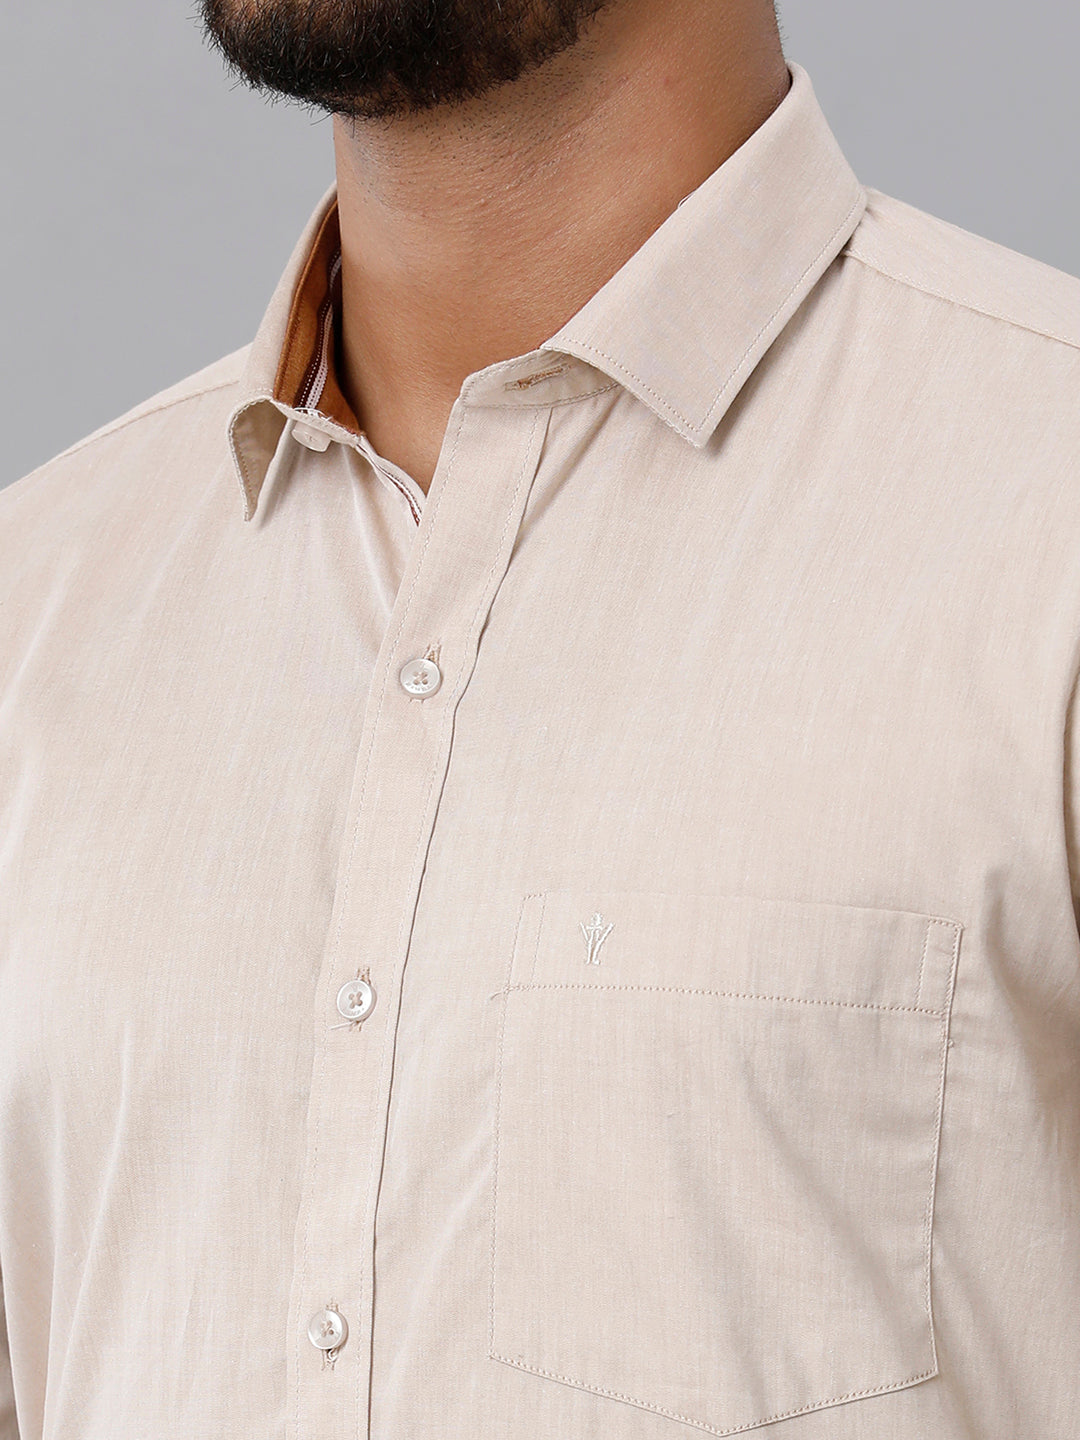 Mens Premium Cotton Formal Shirt Full Sleeves Light Brown MH G113-Zoom view